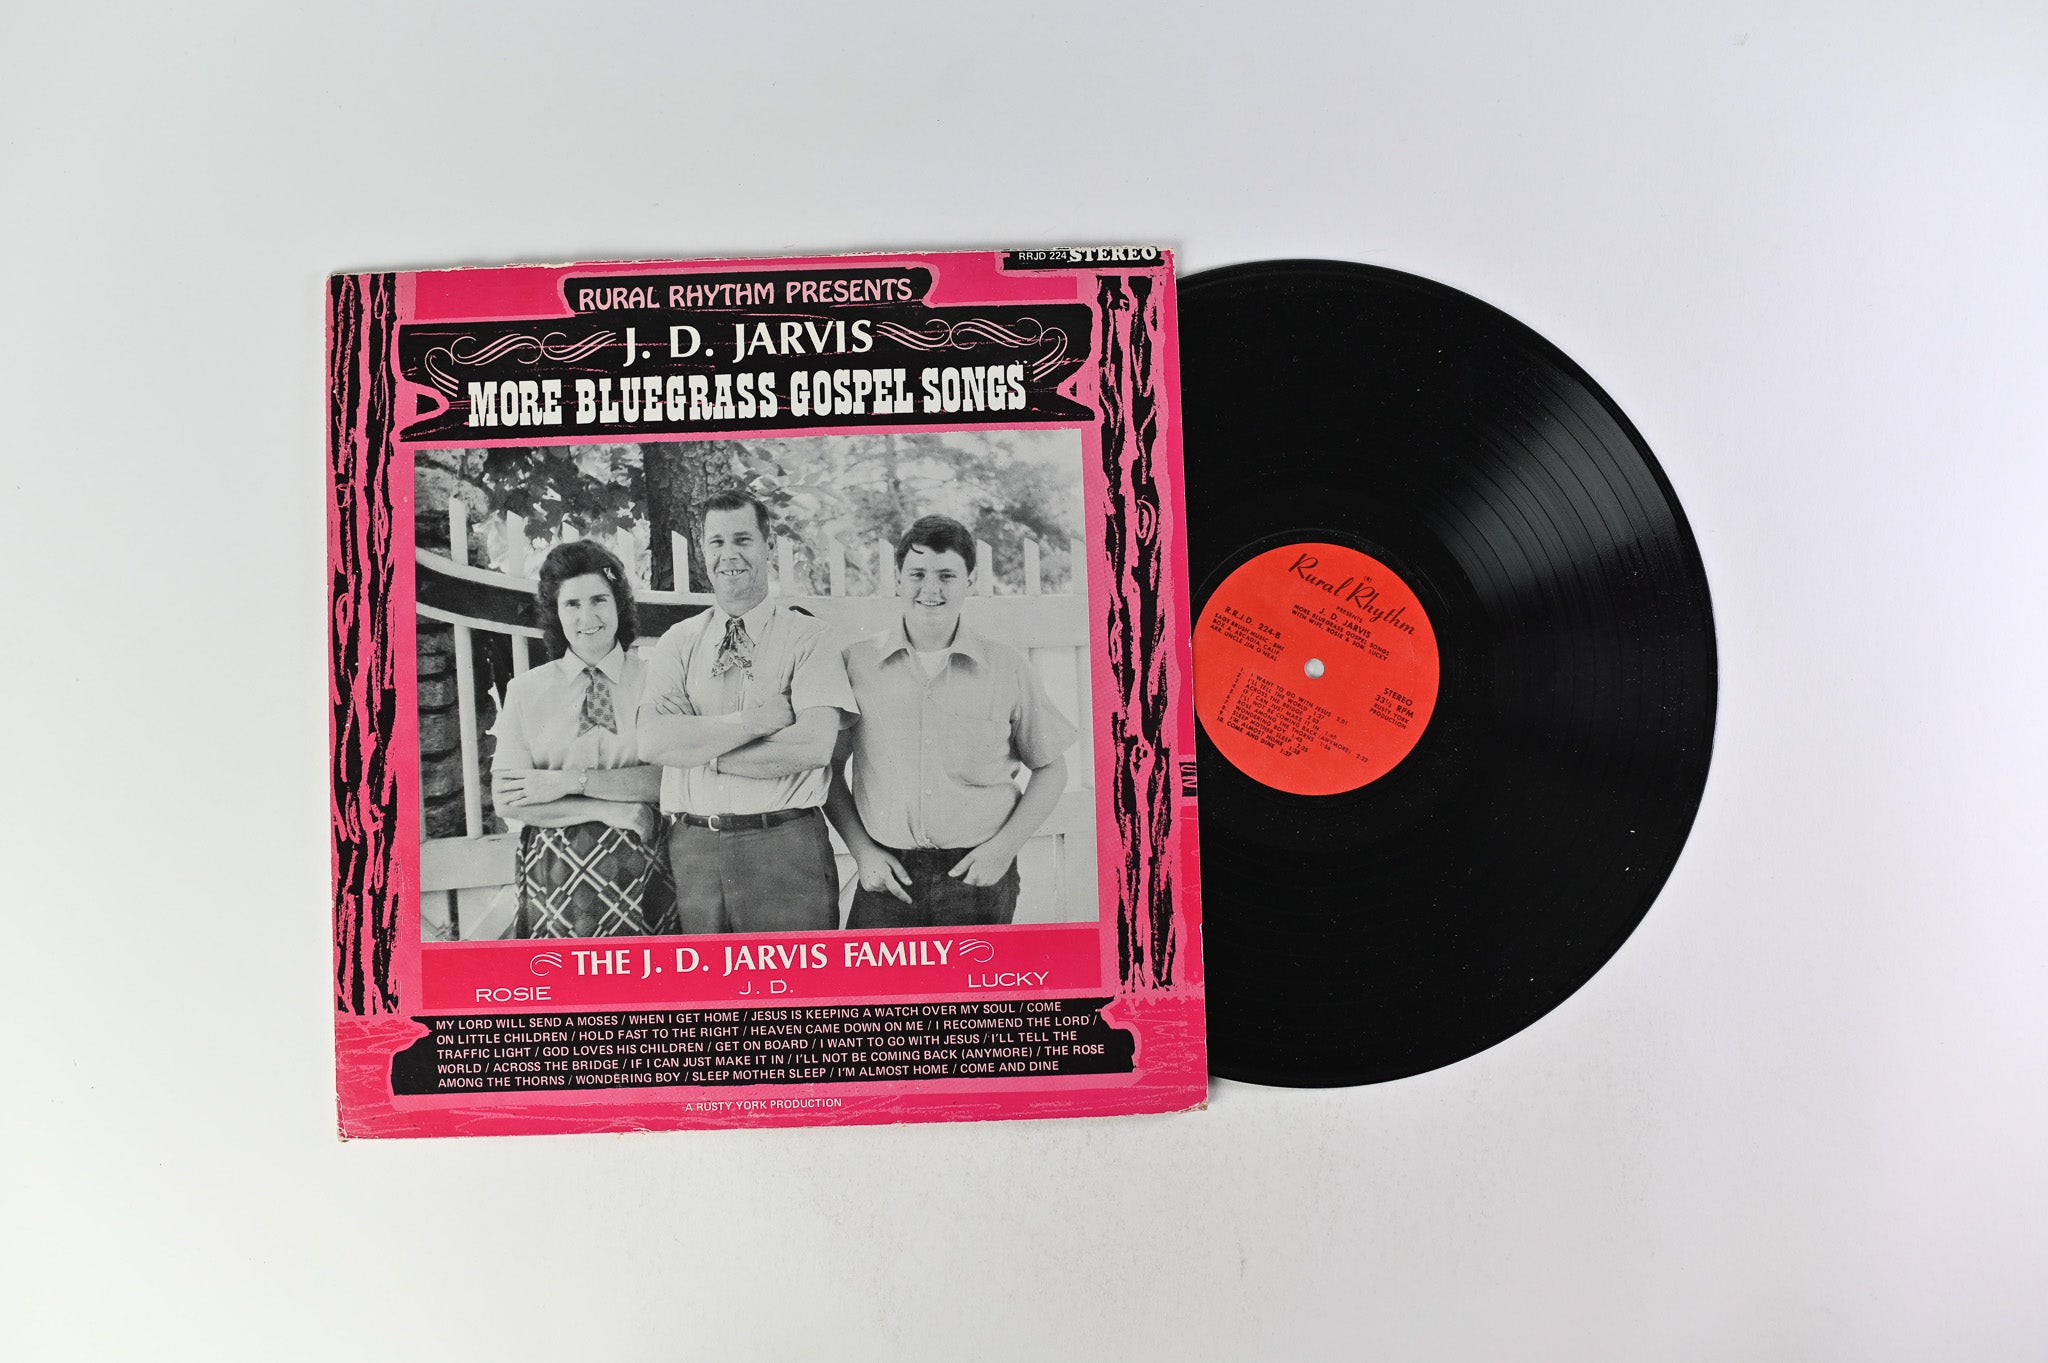 J. D. Jarvis – More Bluegrass Gospel Songs on Rural Rhythm Records